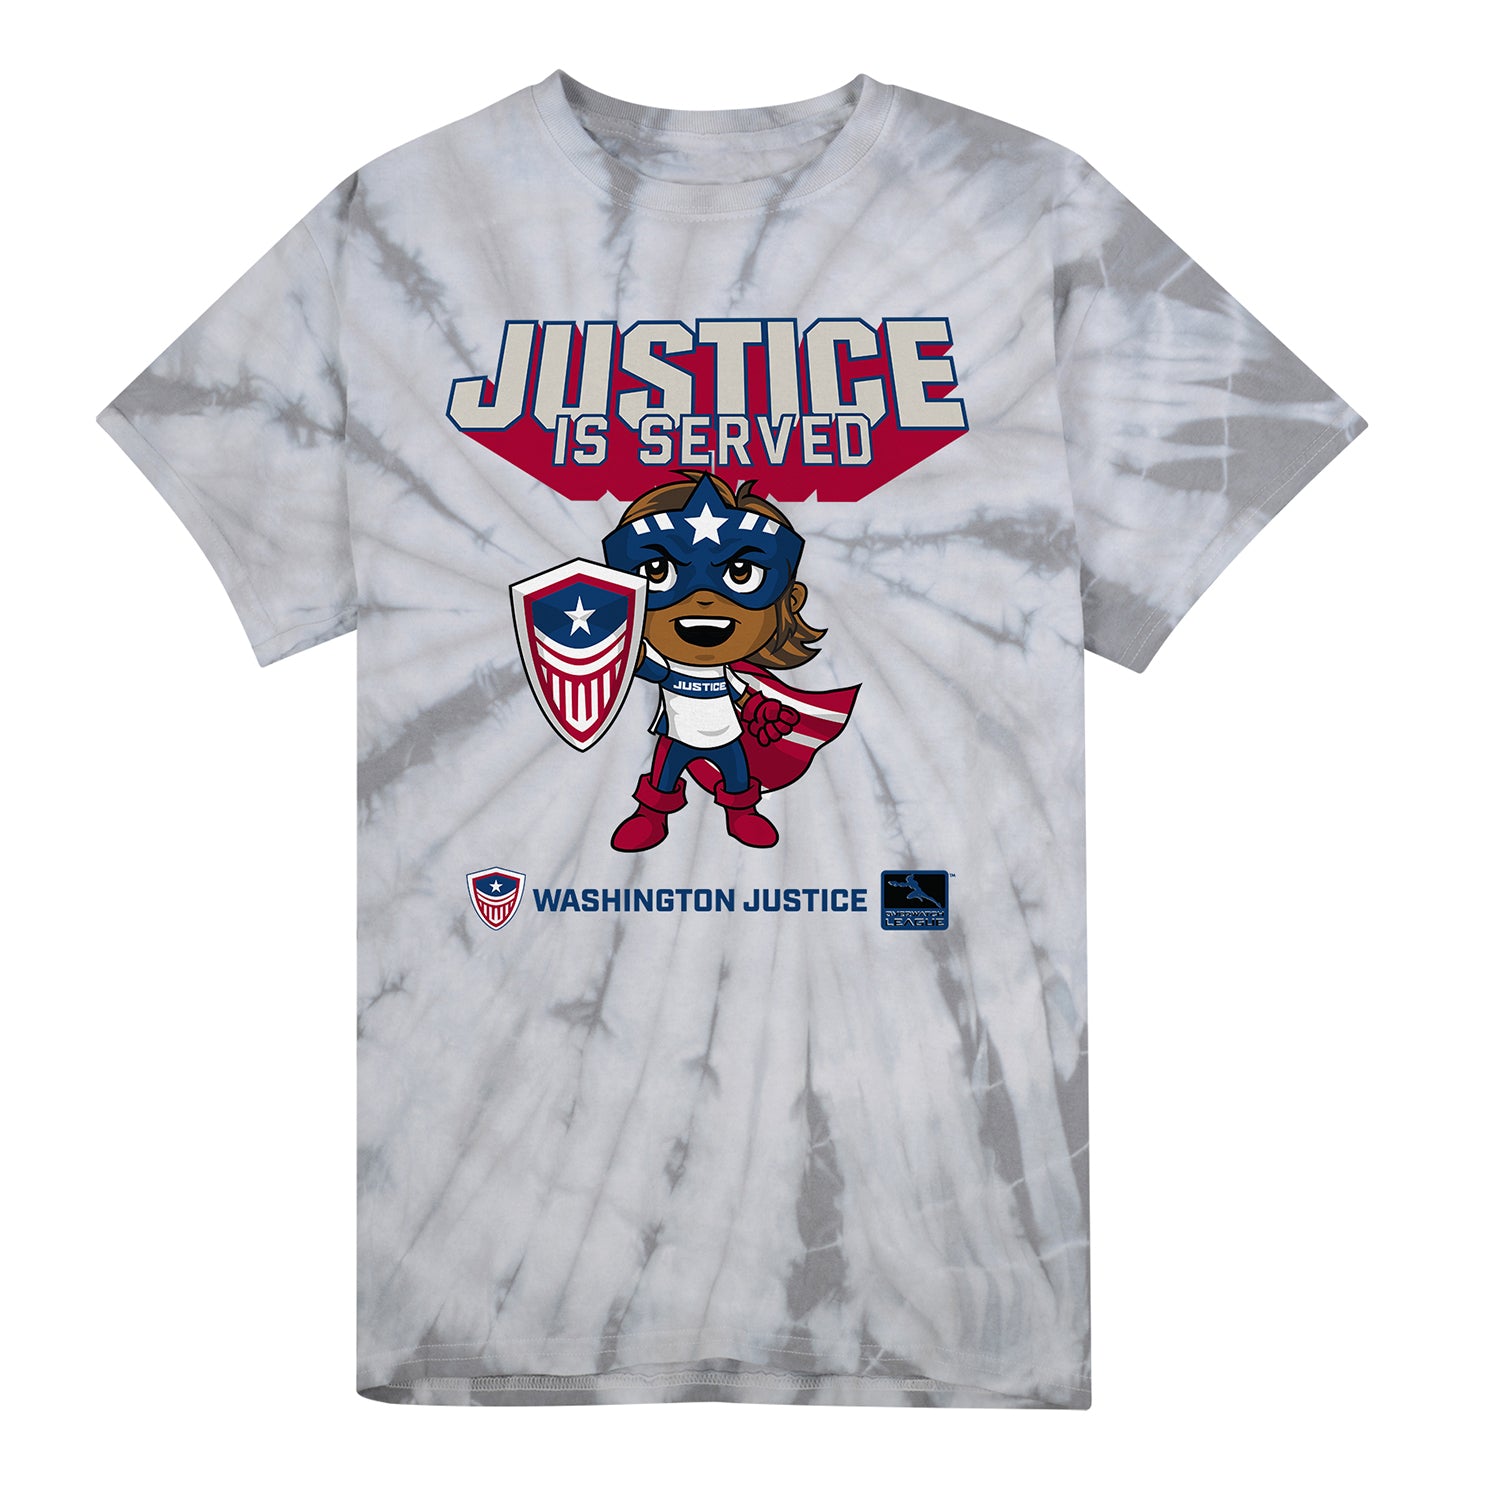 Washington Justice Tie-Dye Chibi Mascot T-Shirt - Front View